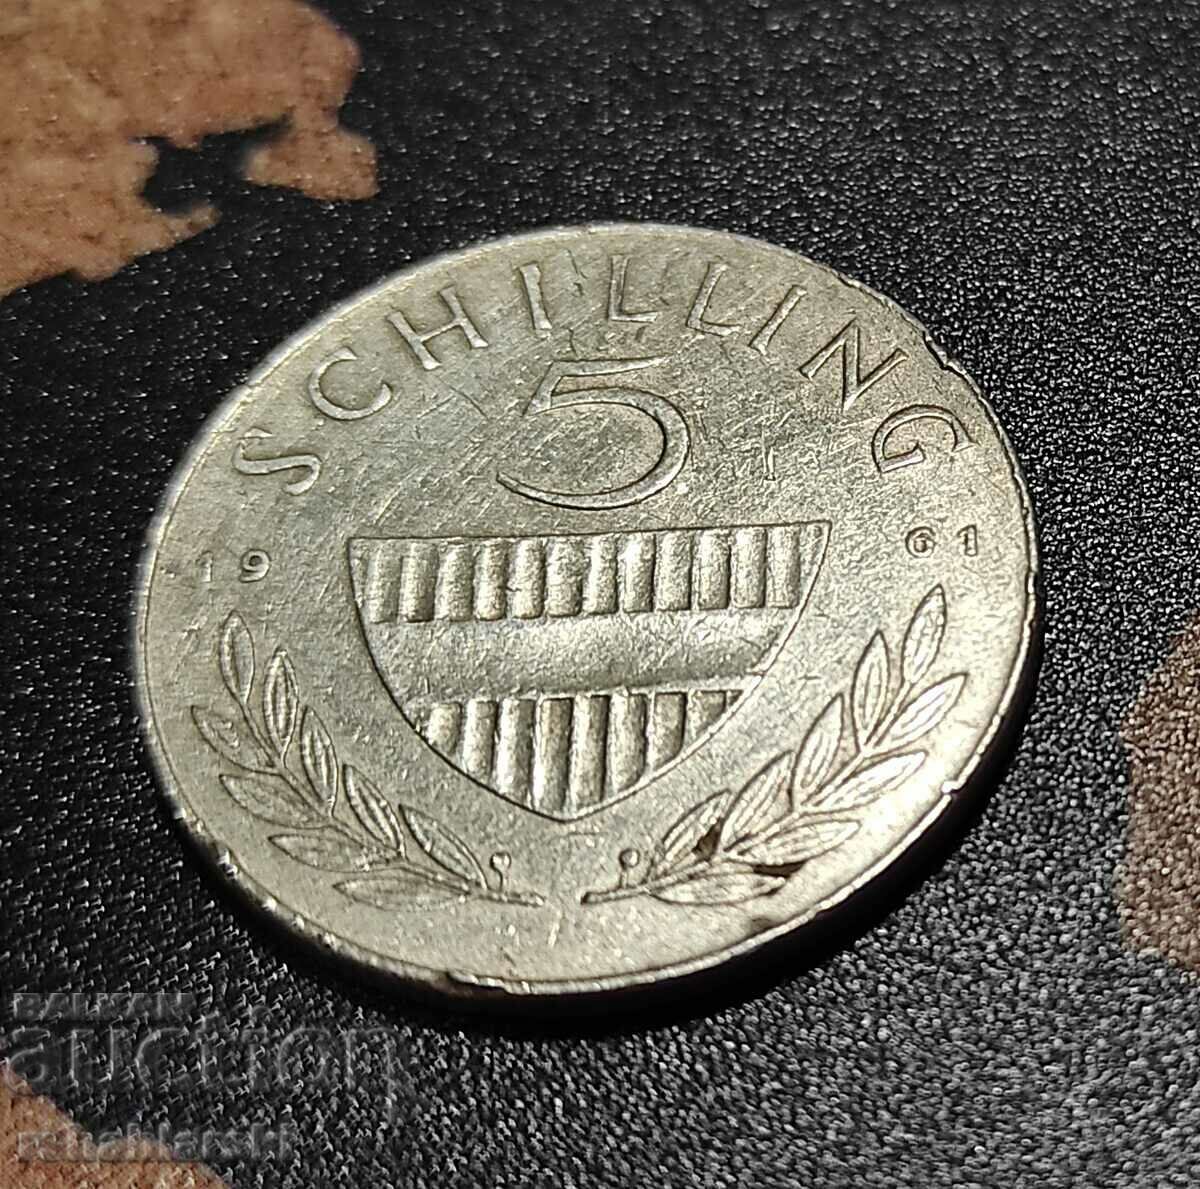 5 Shillings, 1961 - Silver 0.640